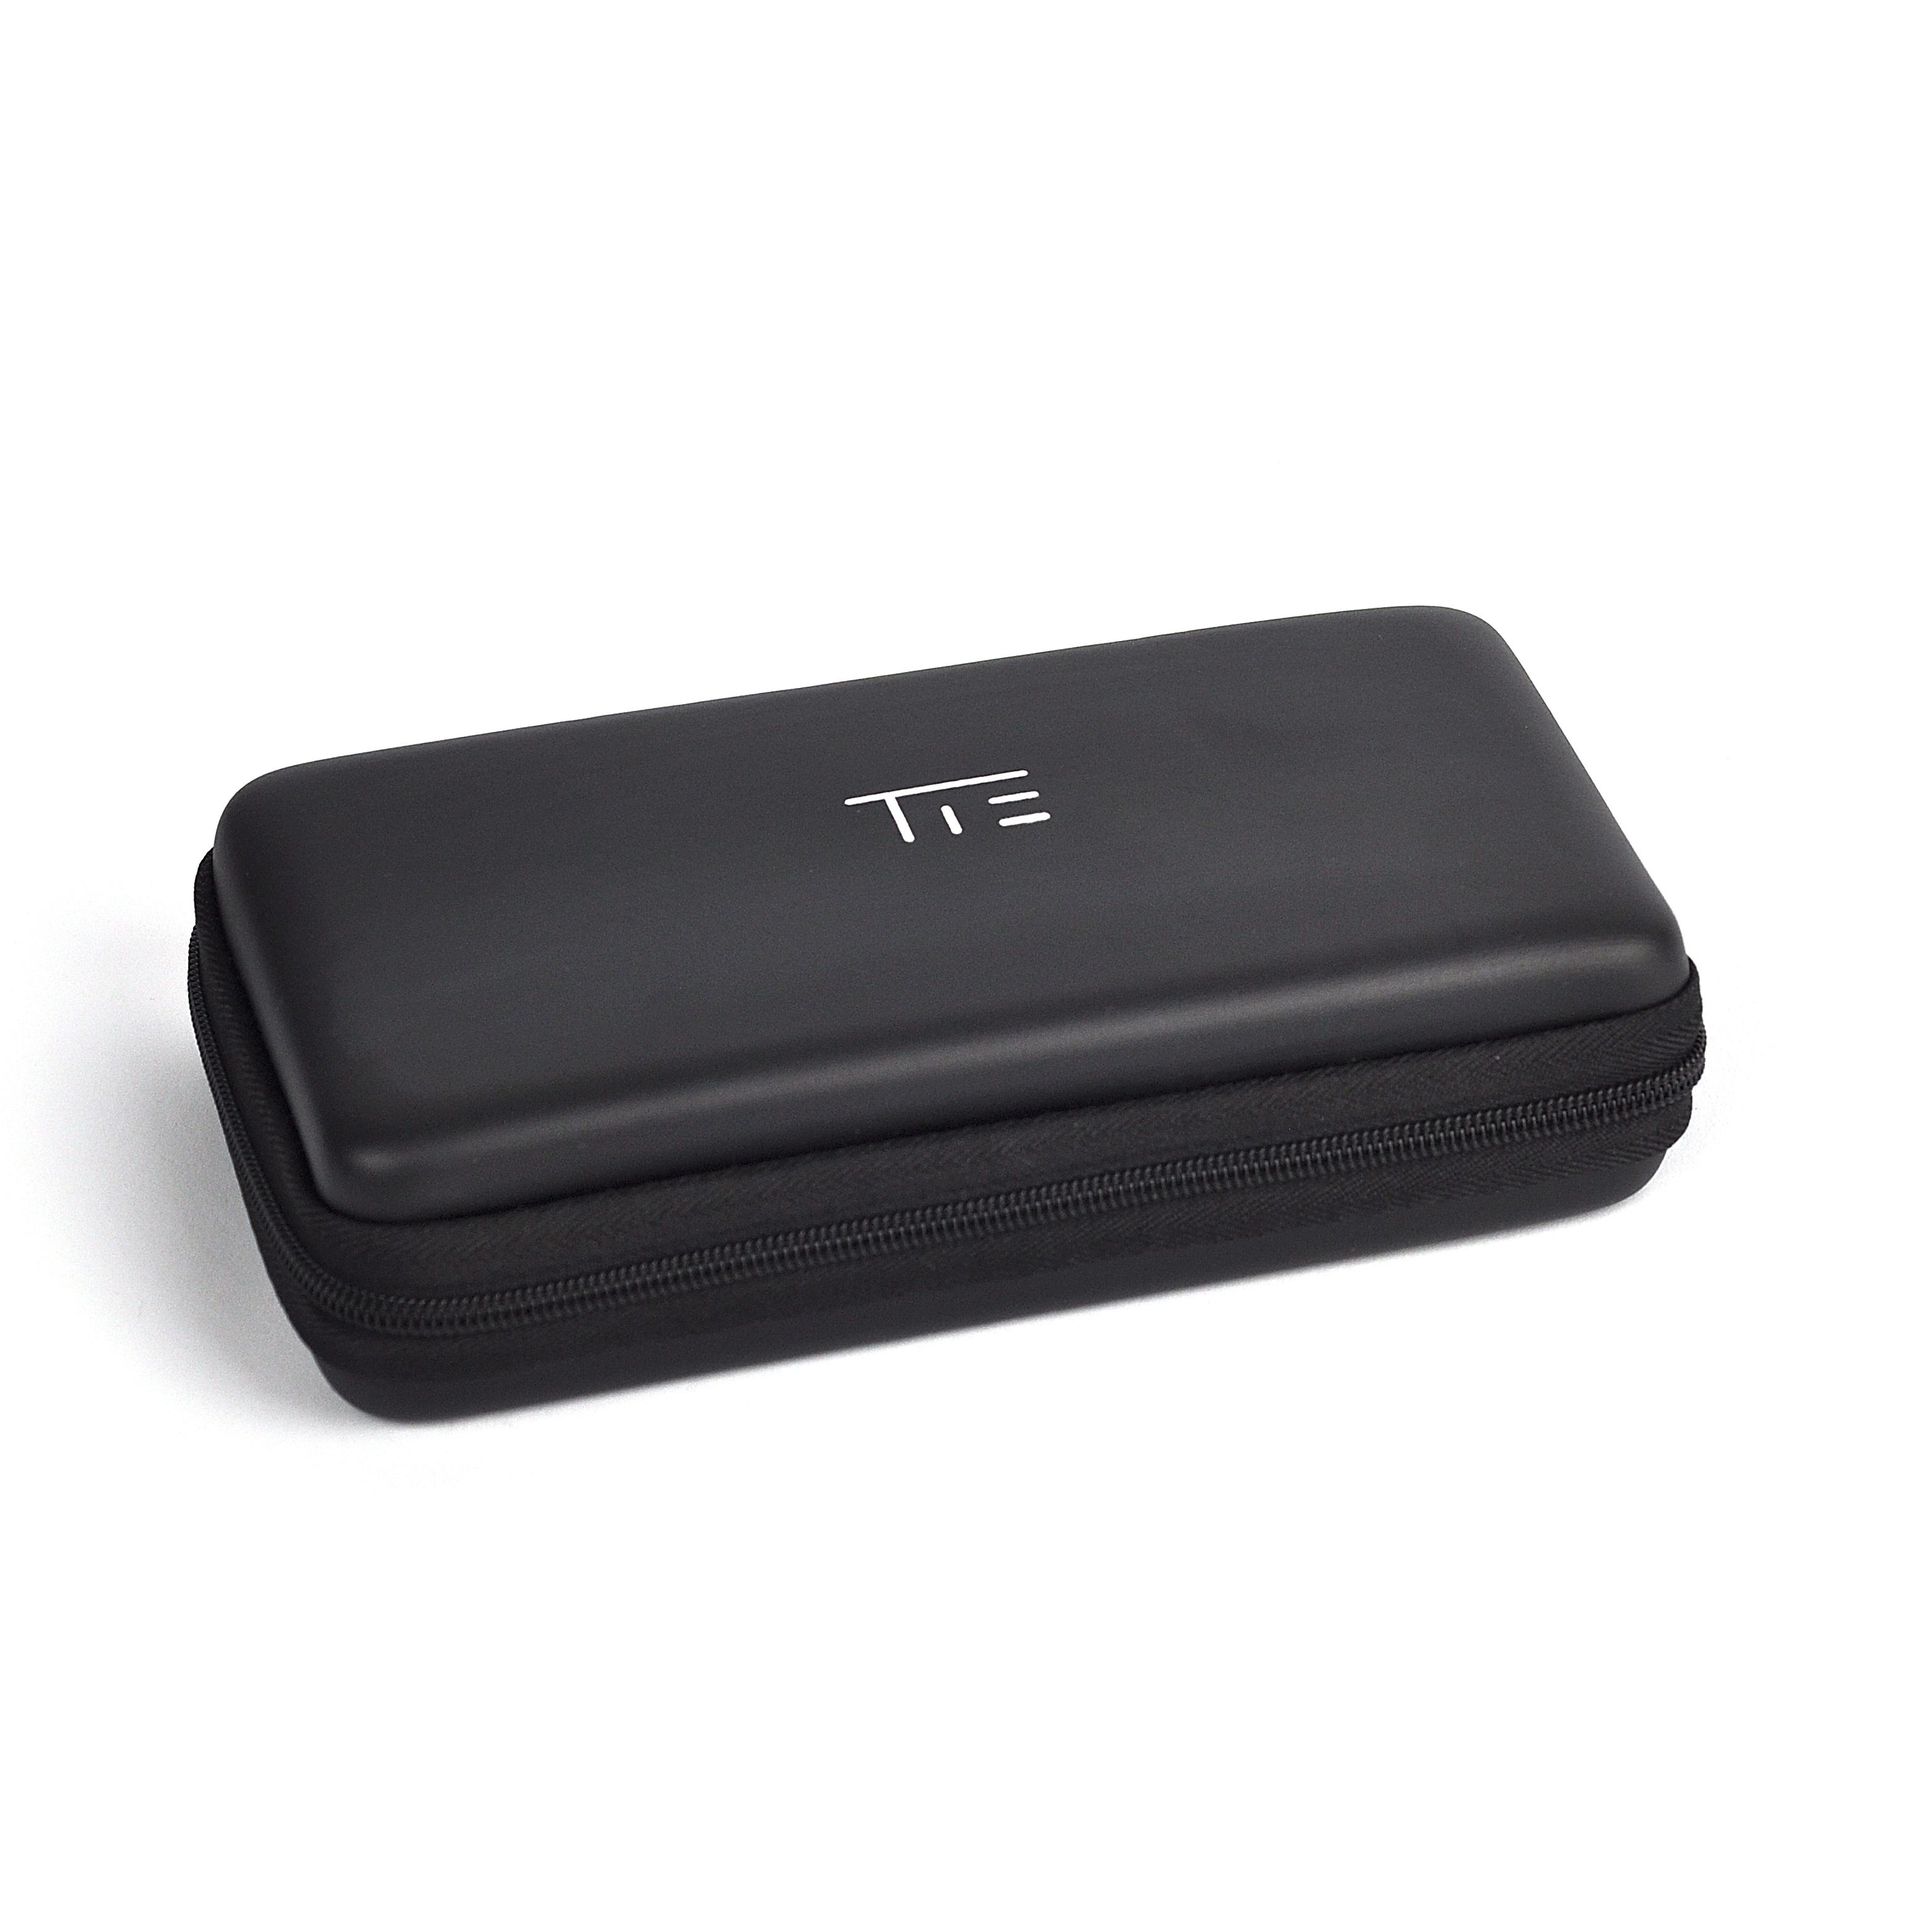 TIE Mobile Digitalrecoder Handyrecorder mit Metallgehäuse inkl. Lavaliermikrofon